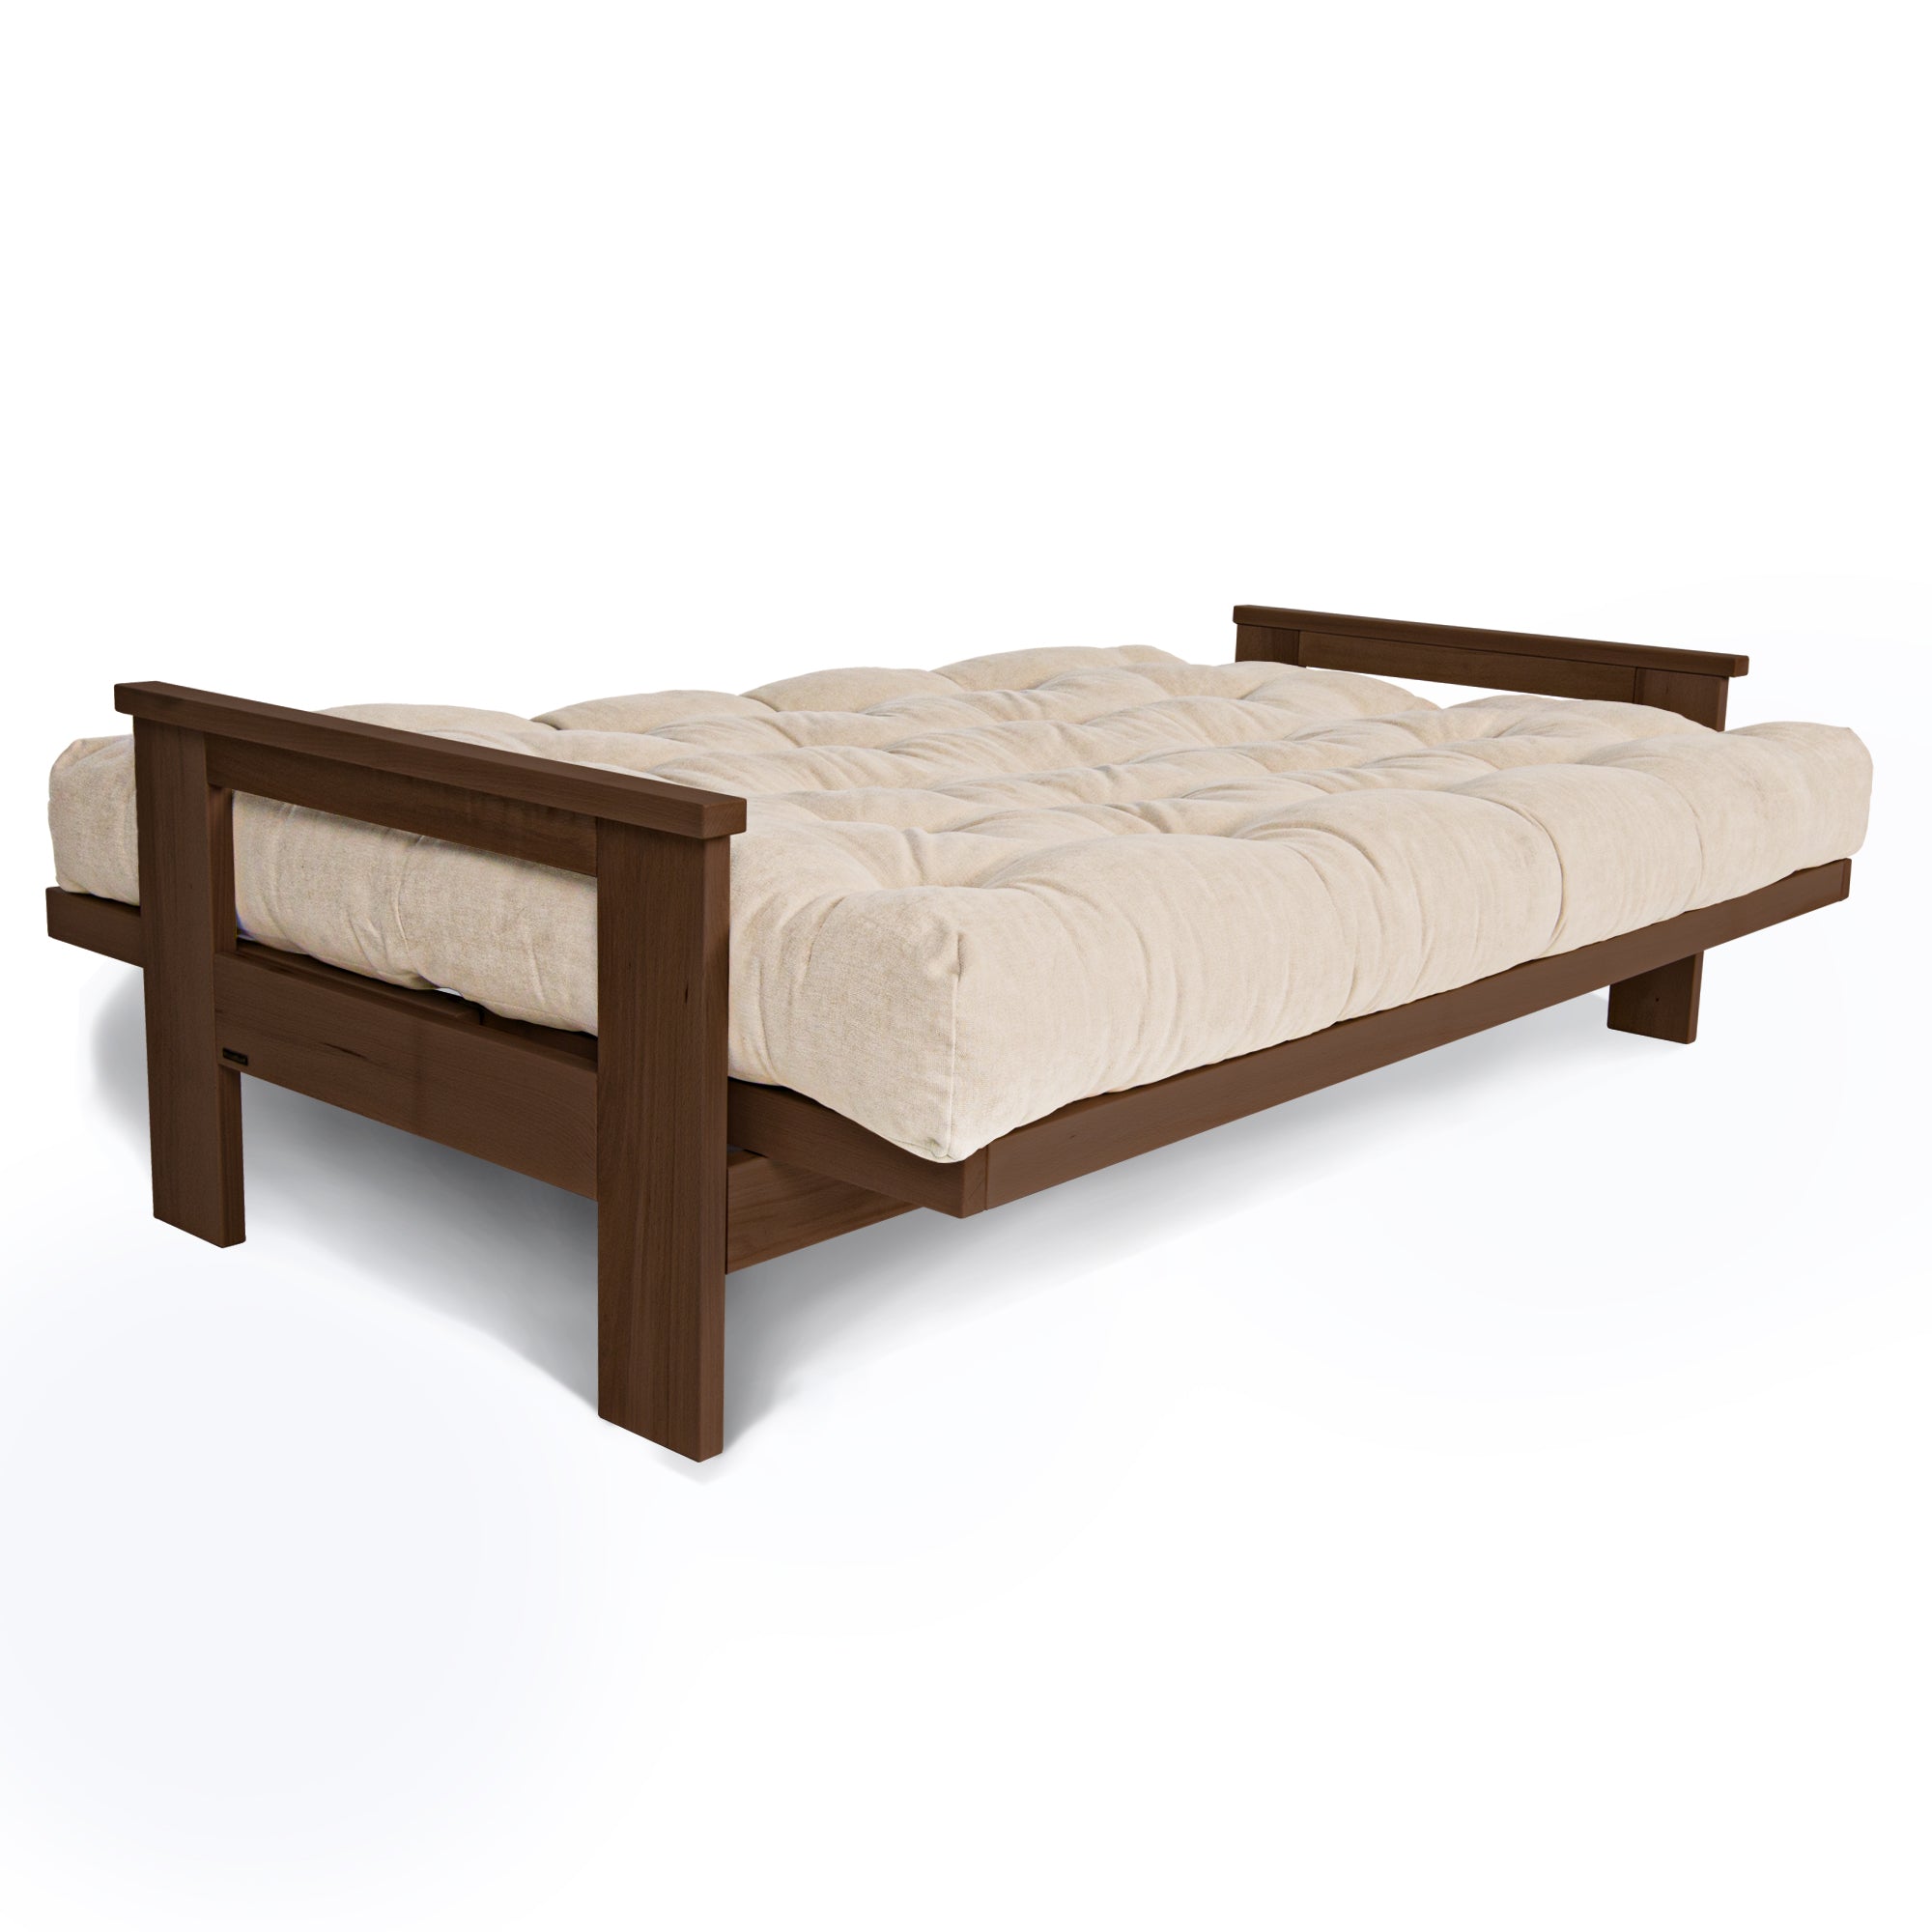 MEXICO Folding Sofa Bed-Beech Wood Frame-Walnut Colour-creamy fabric colour-folded view